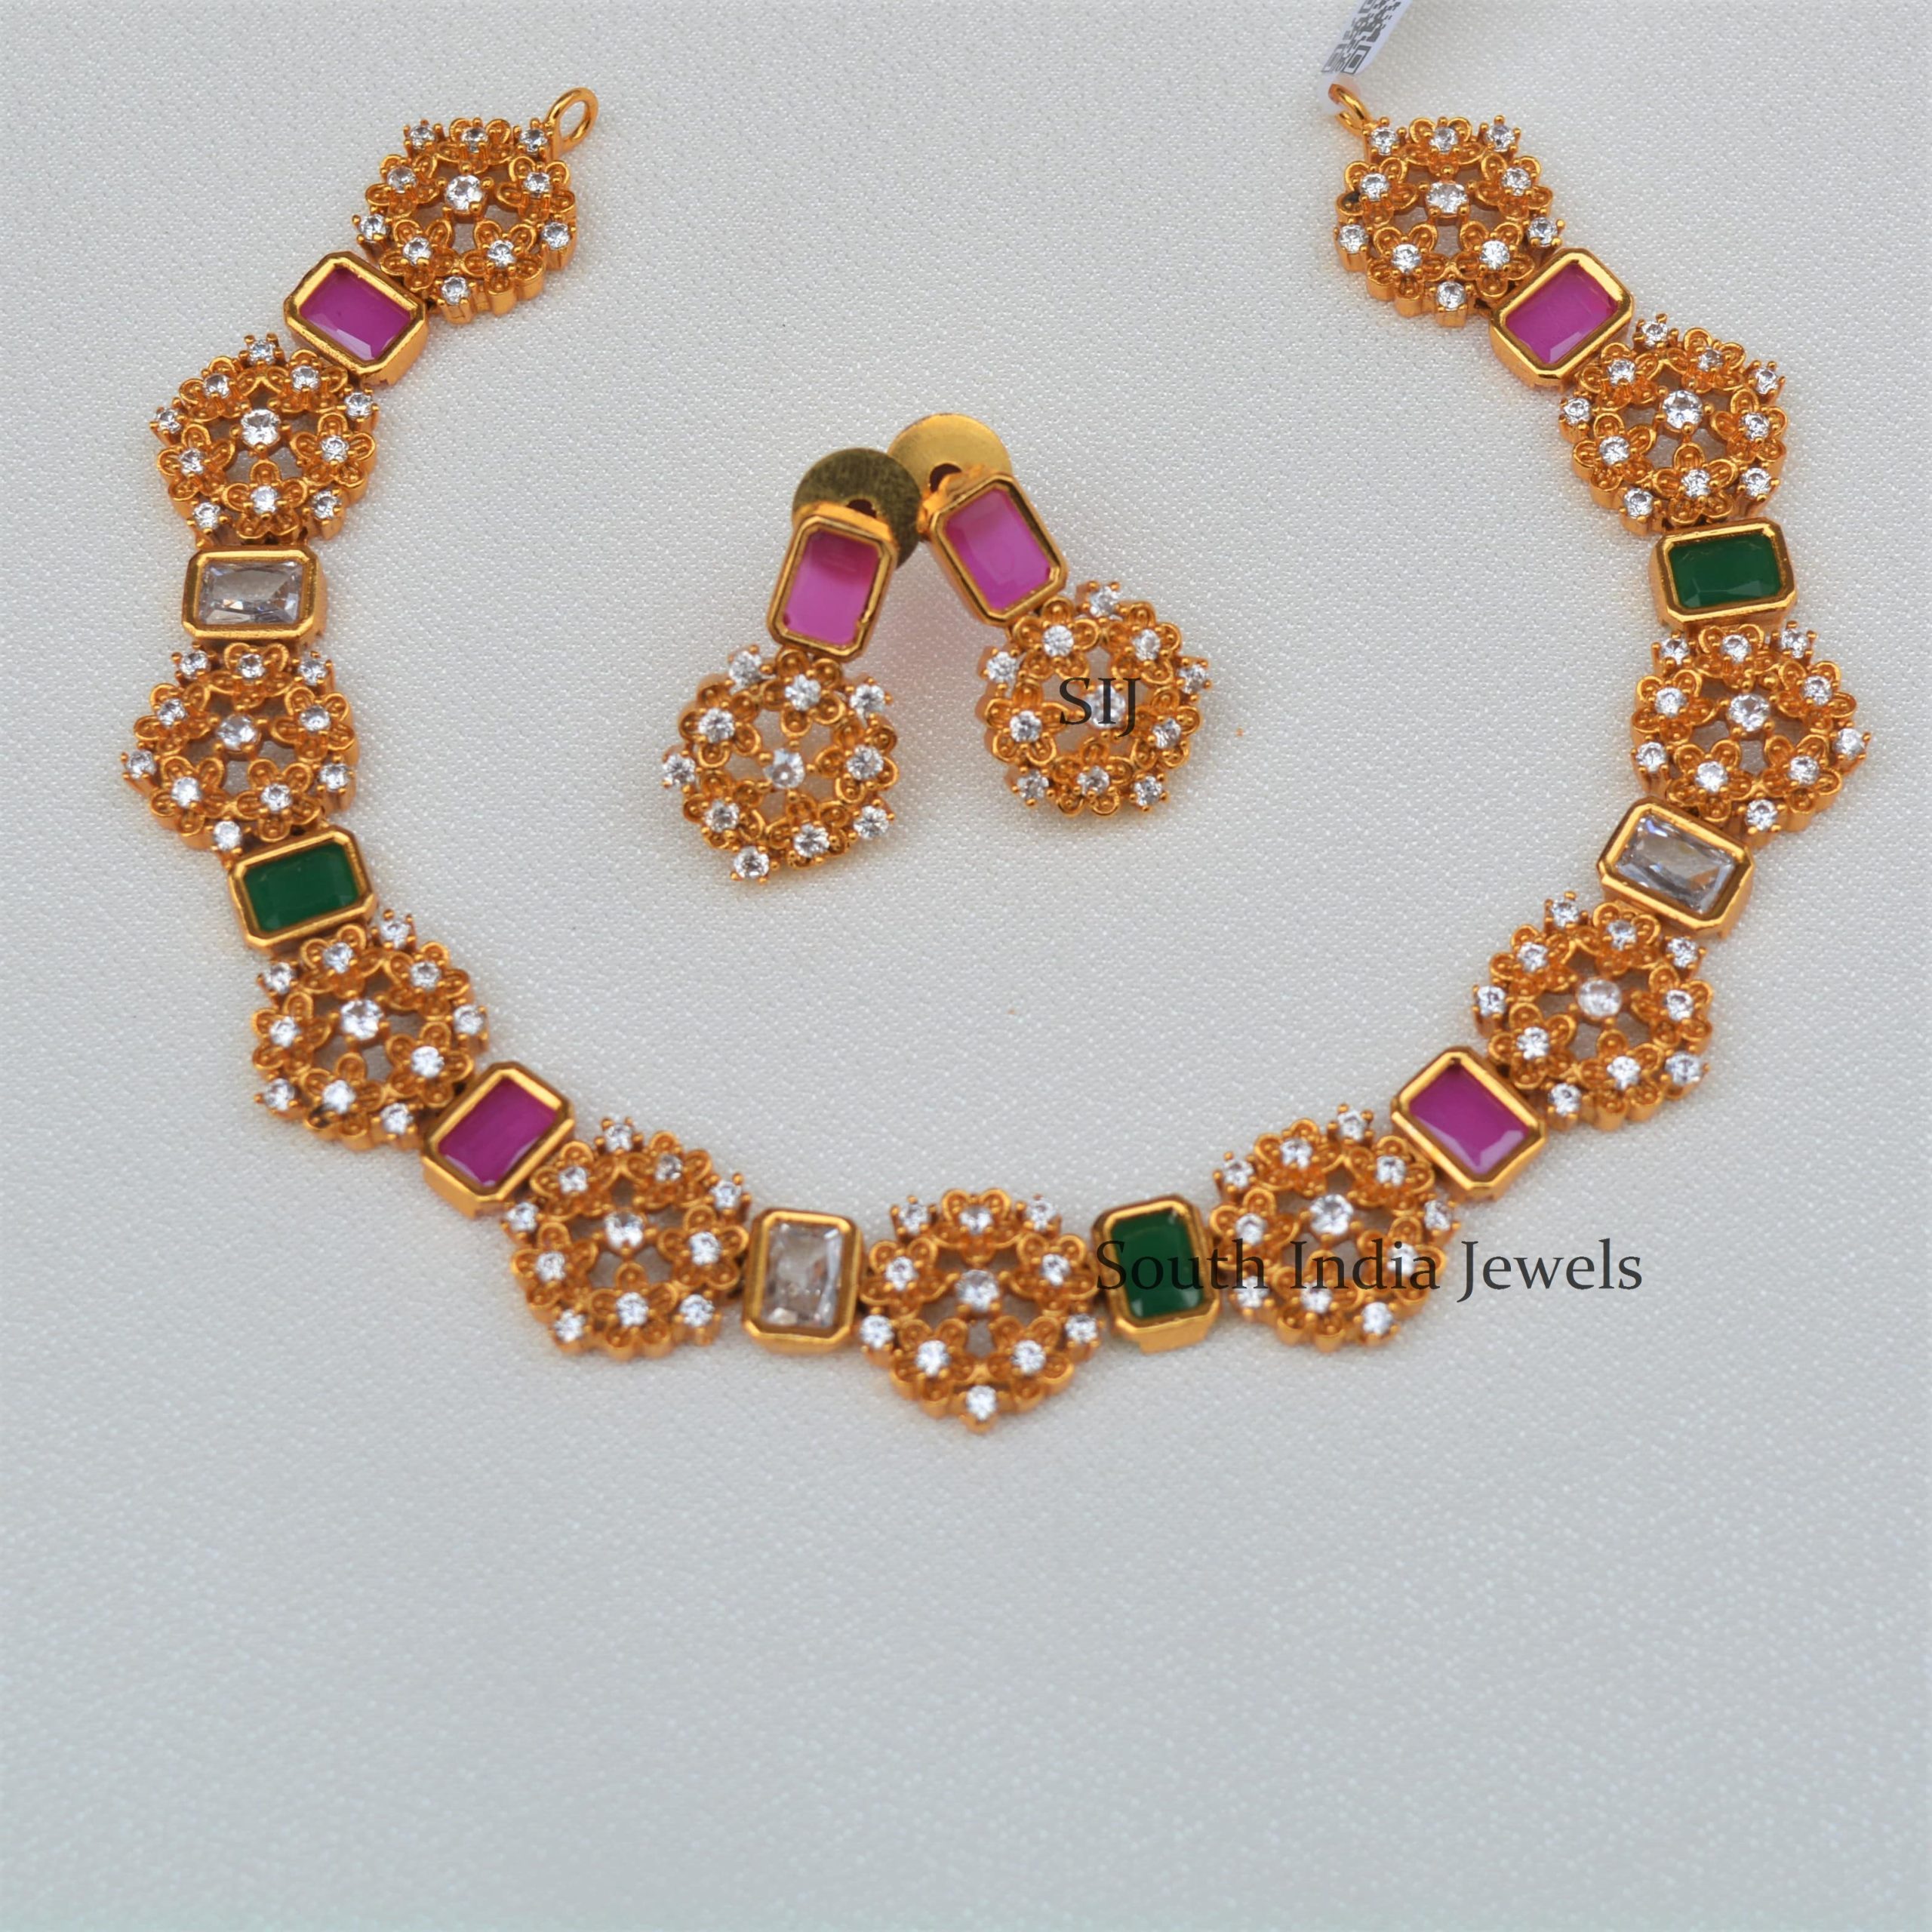 Stunning Floral Design Multi Color Necklace